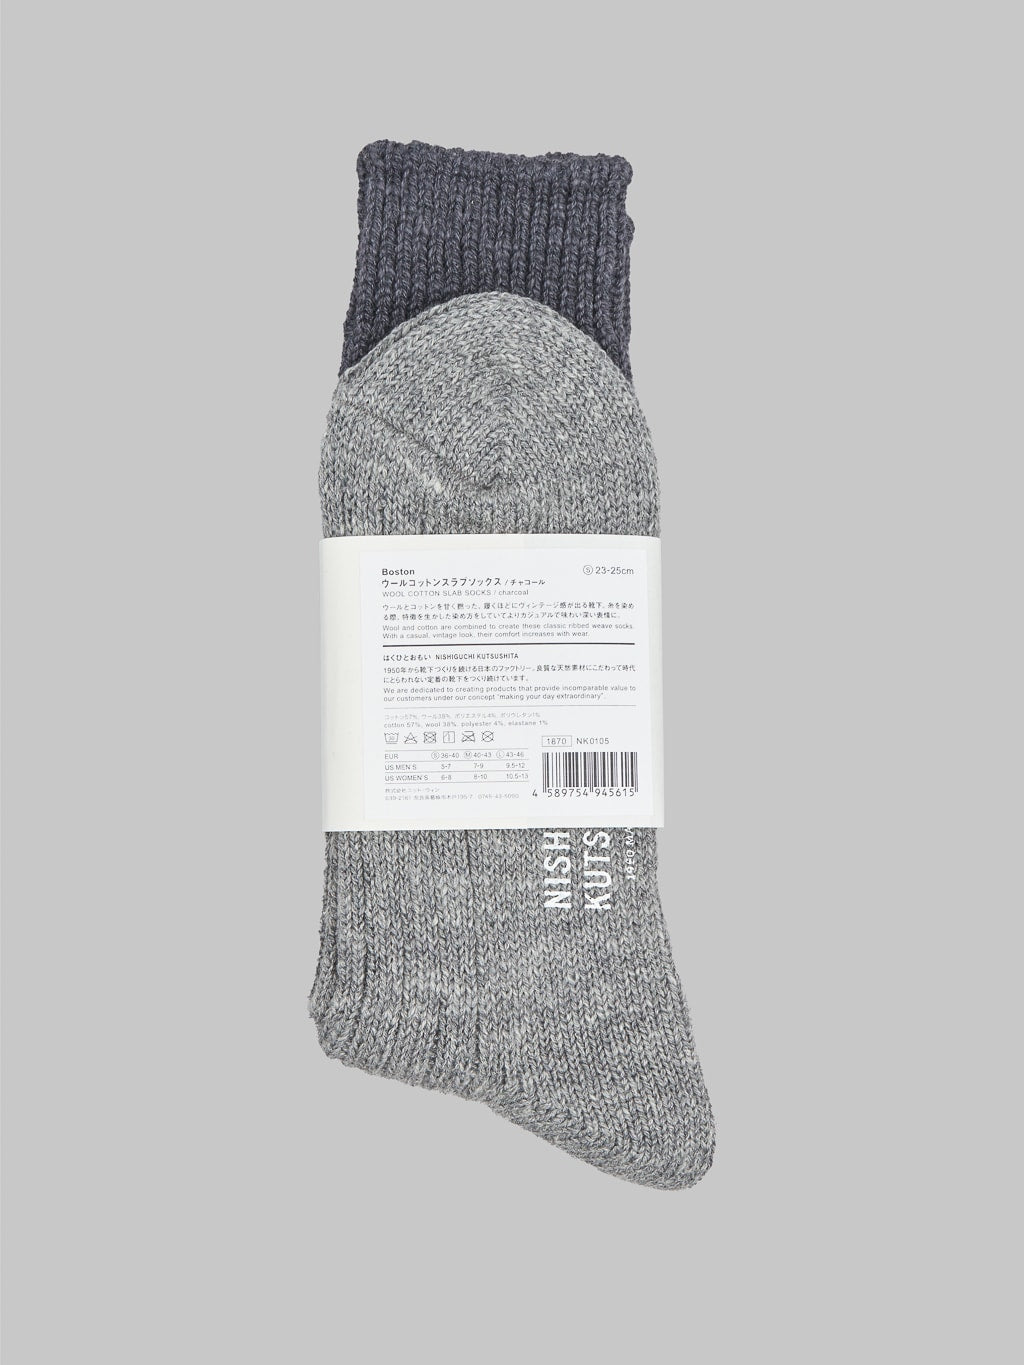 Nishiguchi Kutsushita Wool Cotton Socks Charcoal Label Description